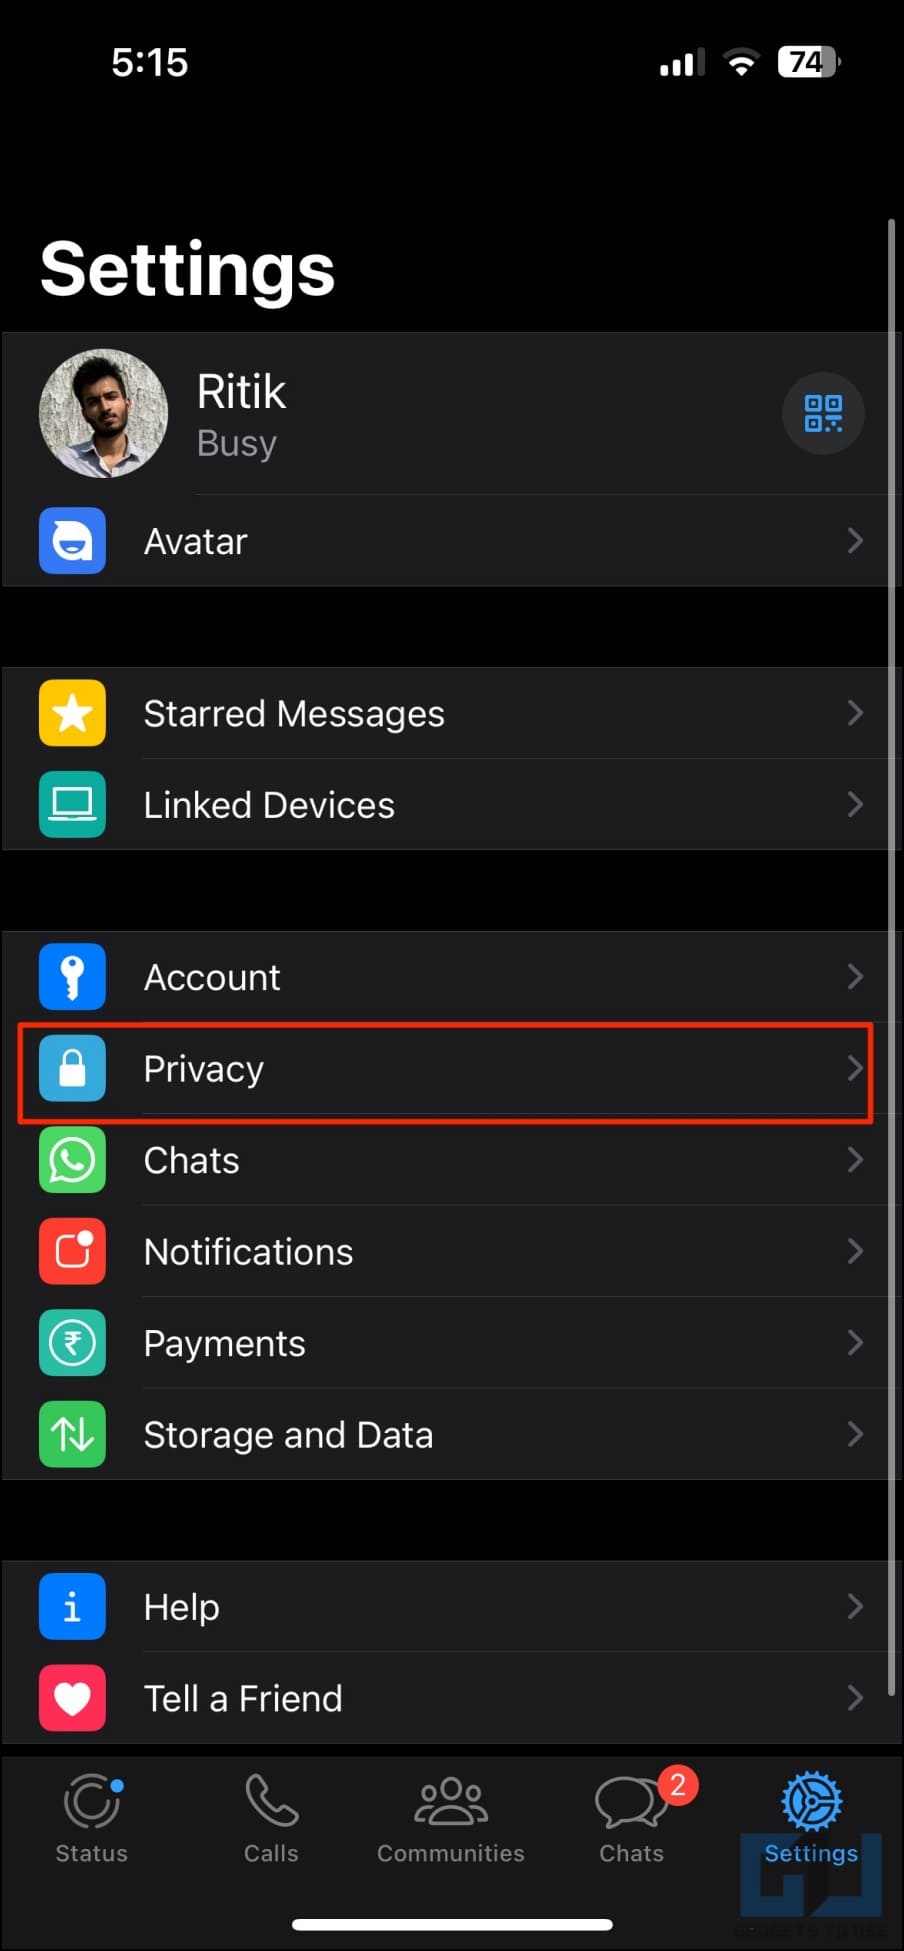 Lock WhatsApp App on iPhone